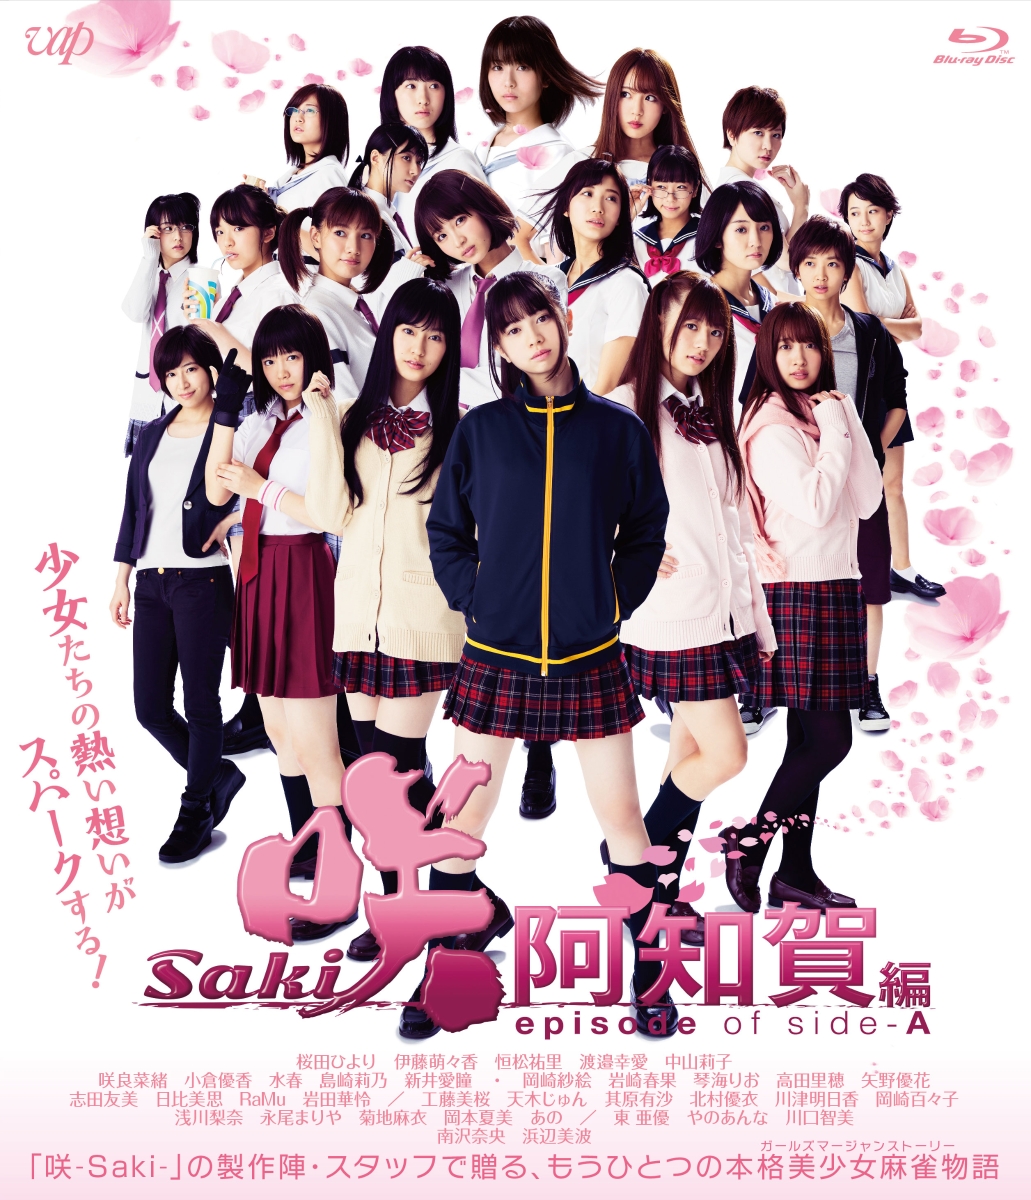 映画「咲 -Saki- 阿知賀編 episode of side-A」【Blu-ray】画像